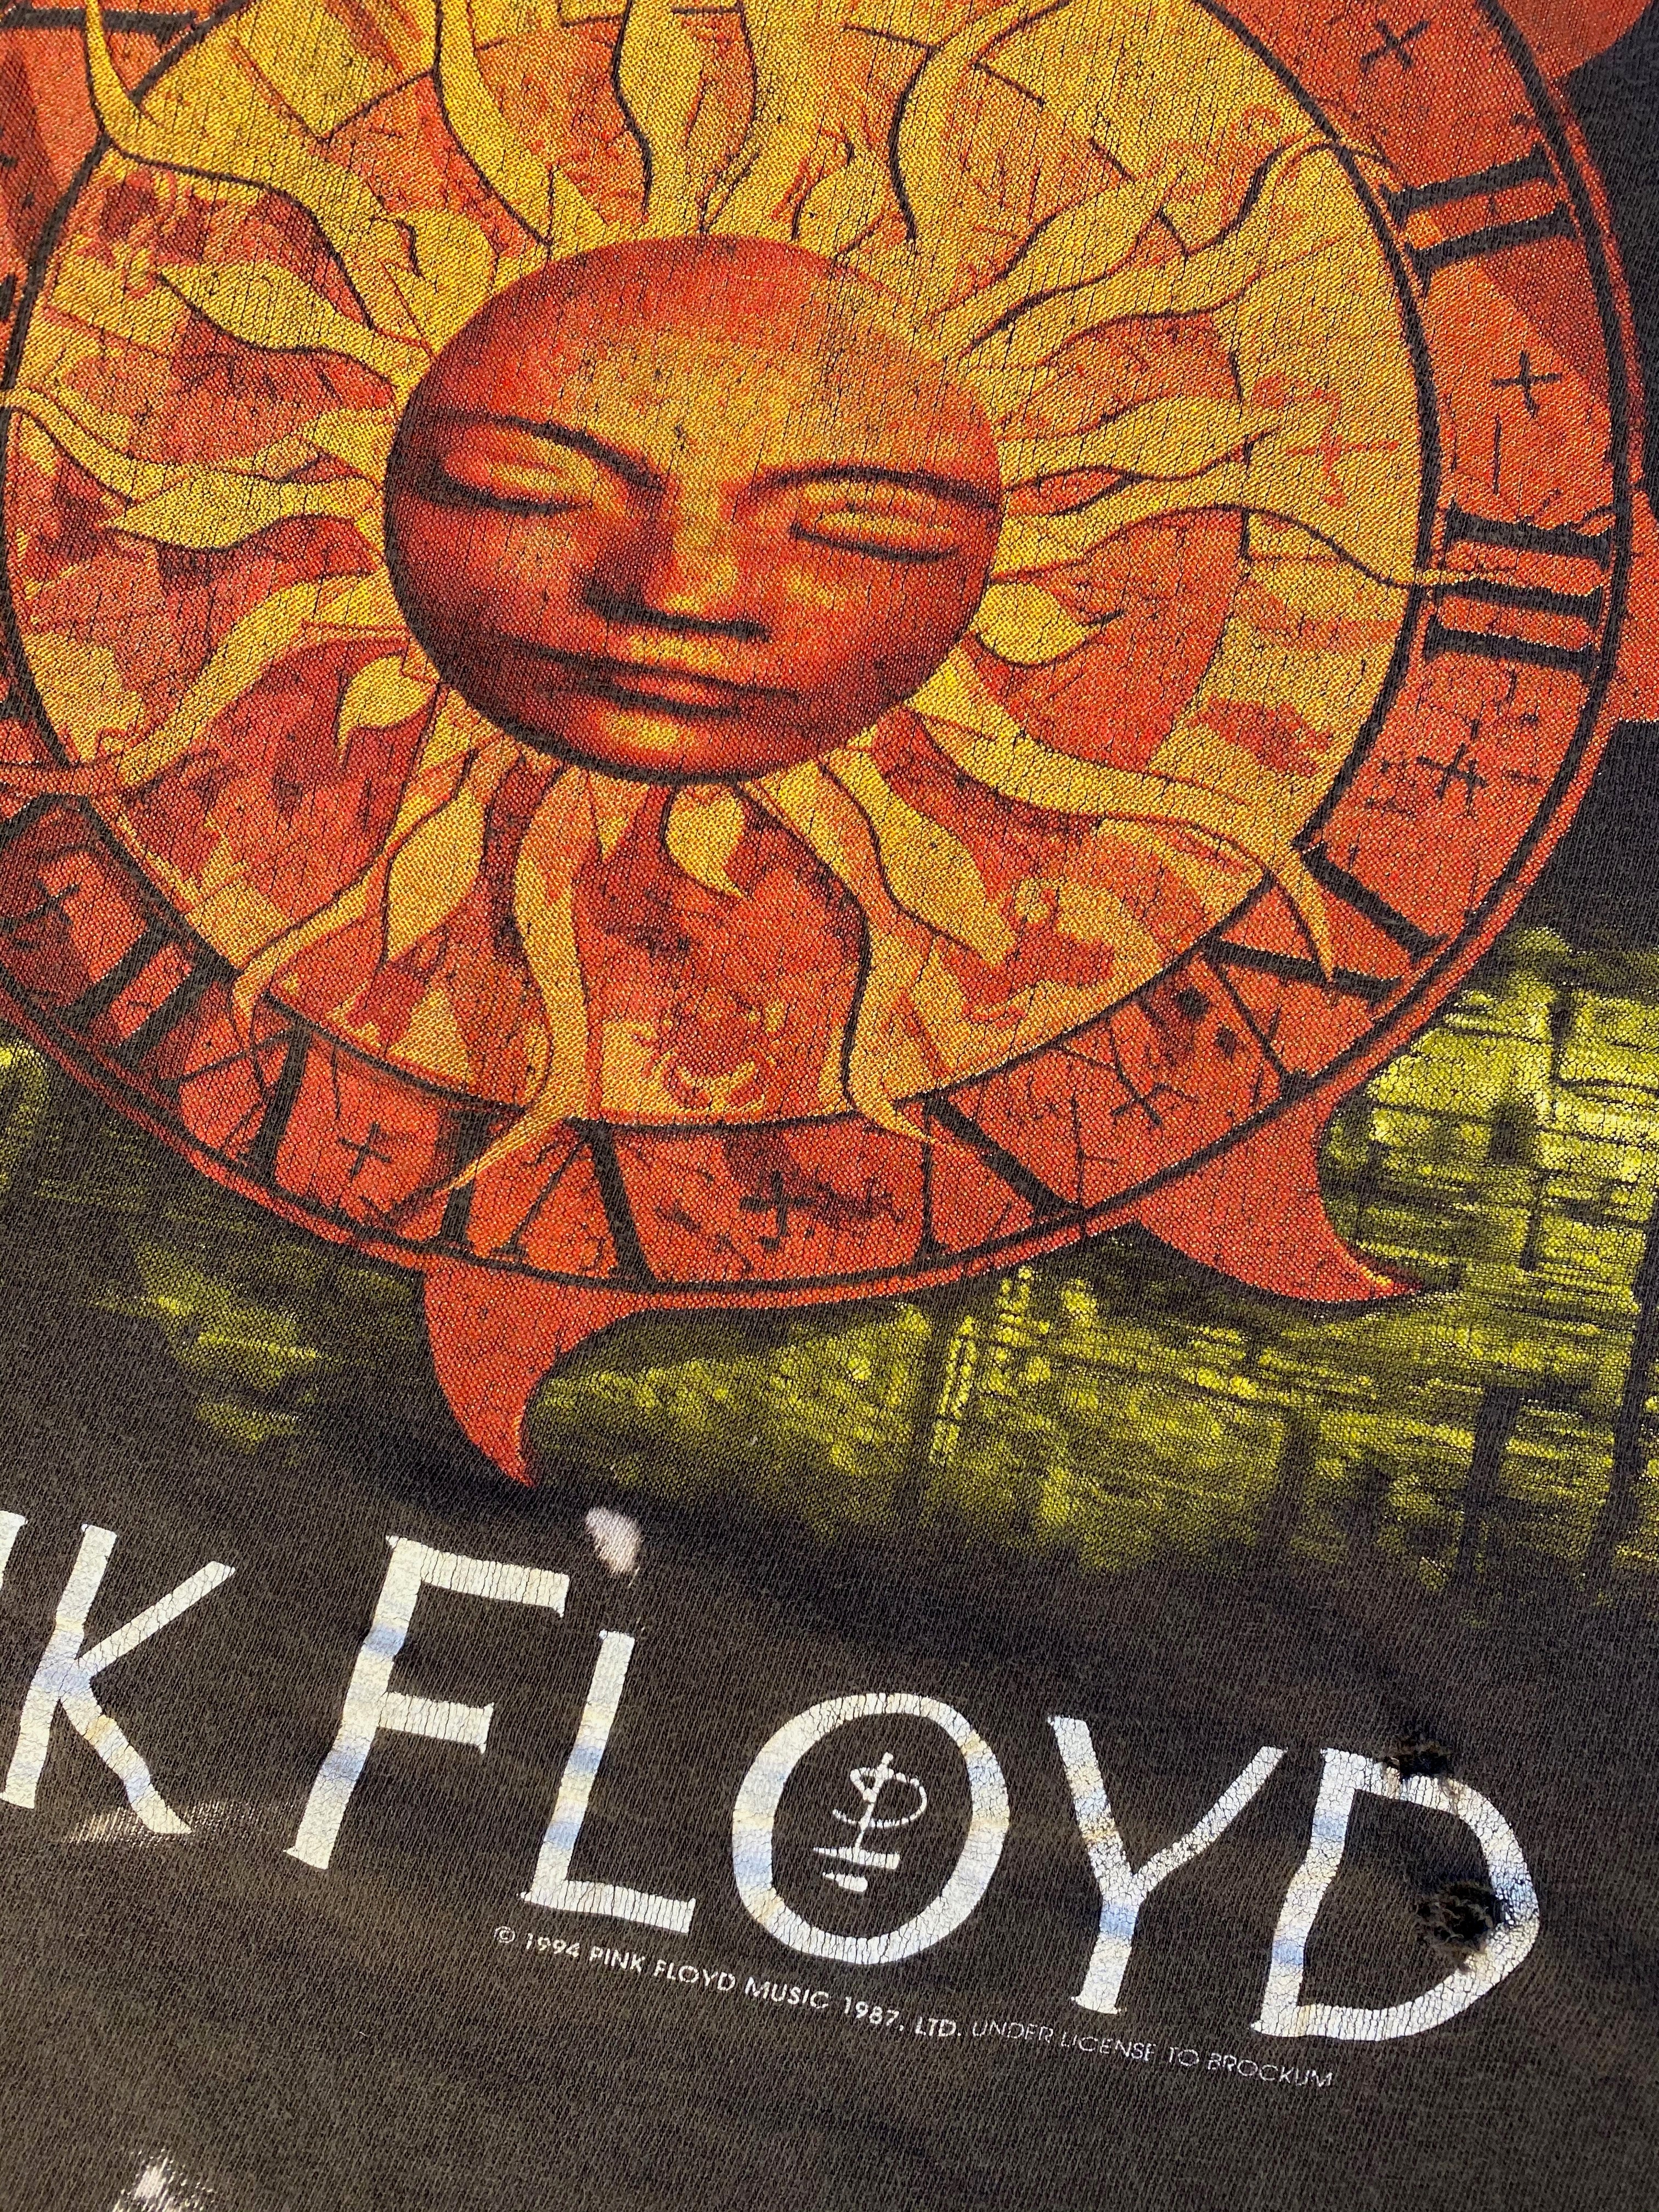 Vintage Pink Floyd Rock T-Shirt (Tyranny + Mutation Exclusive)